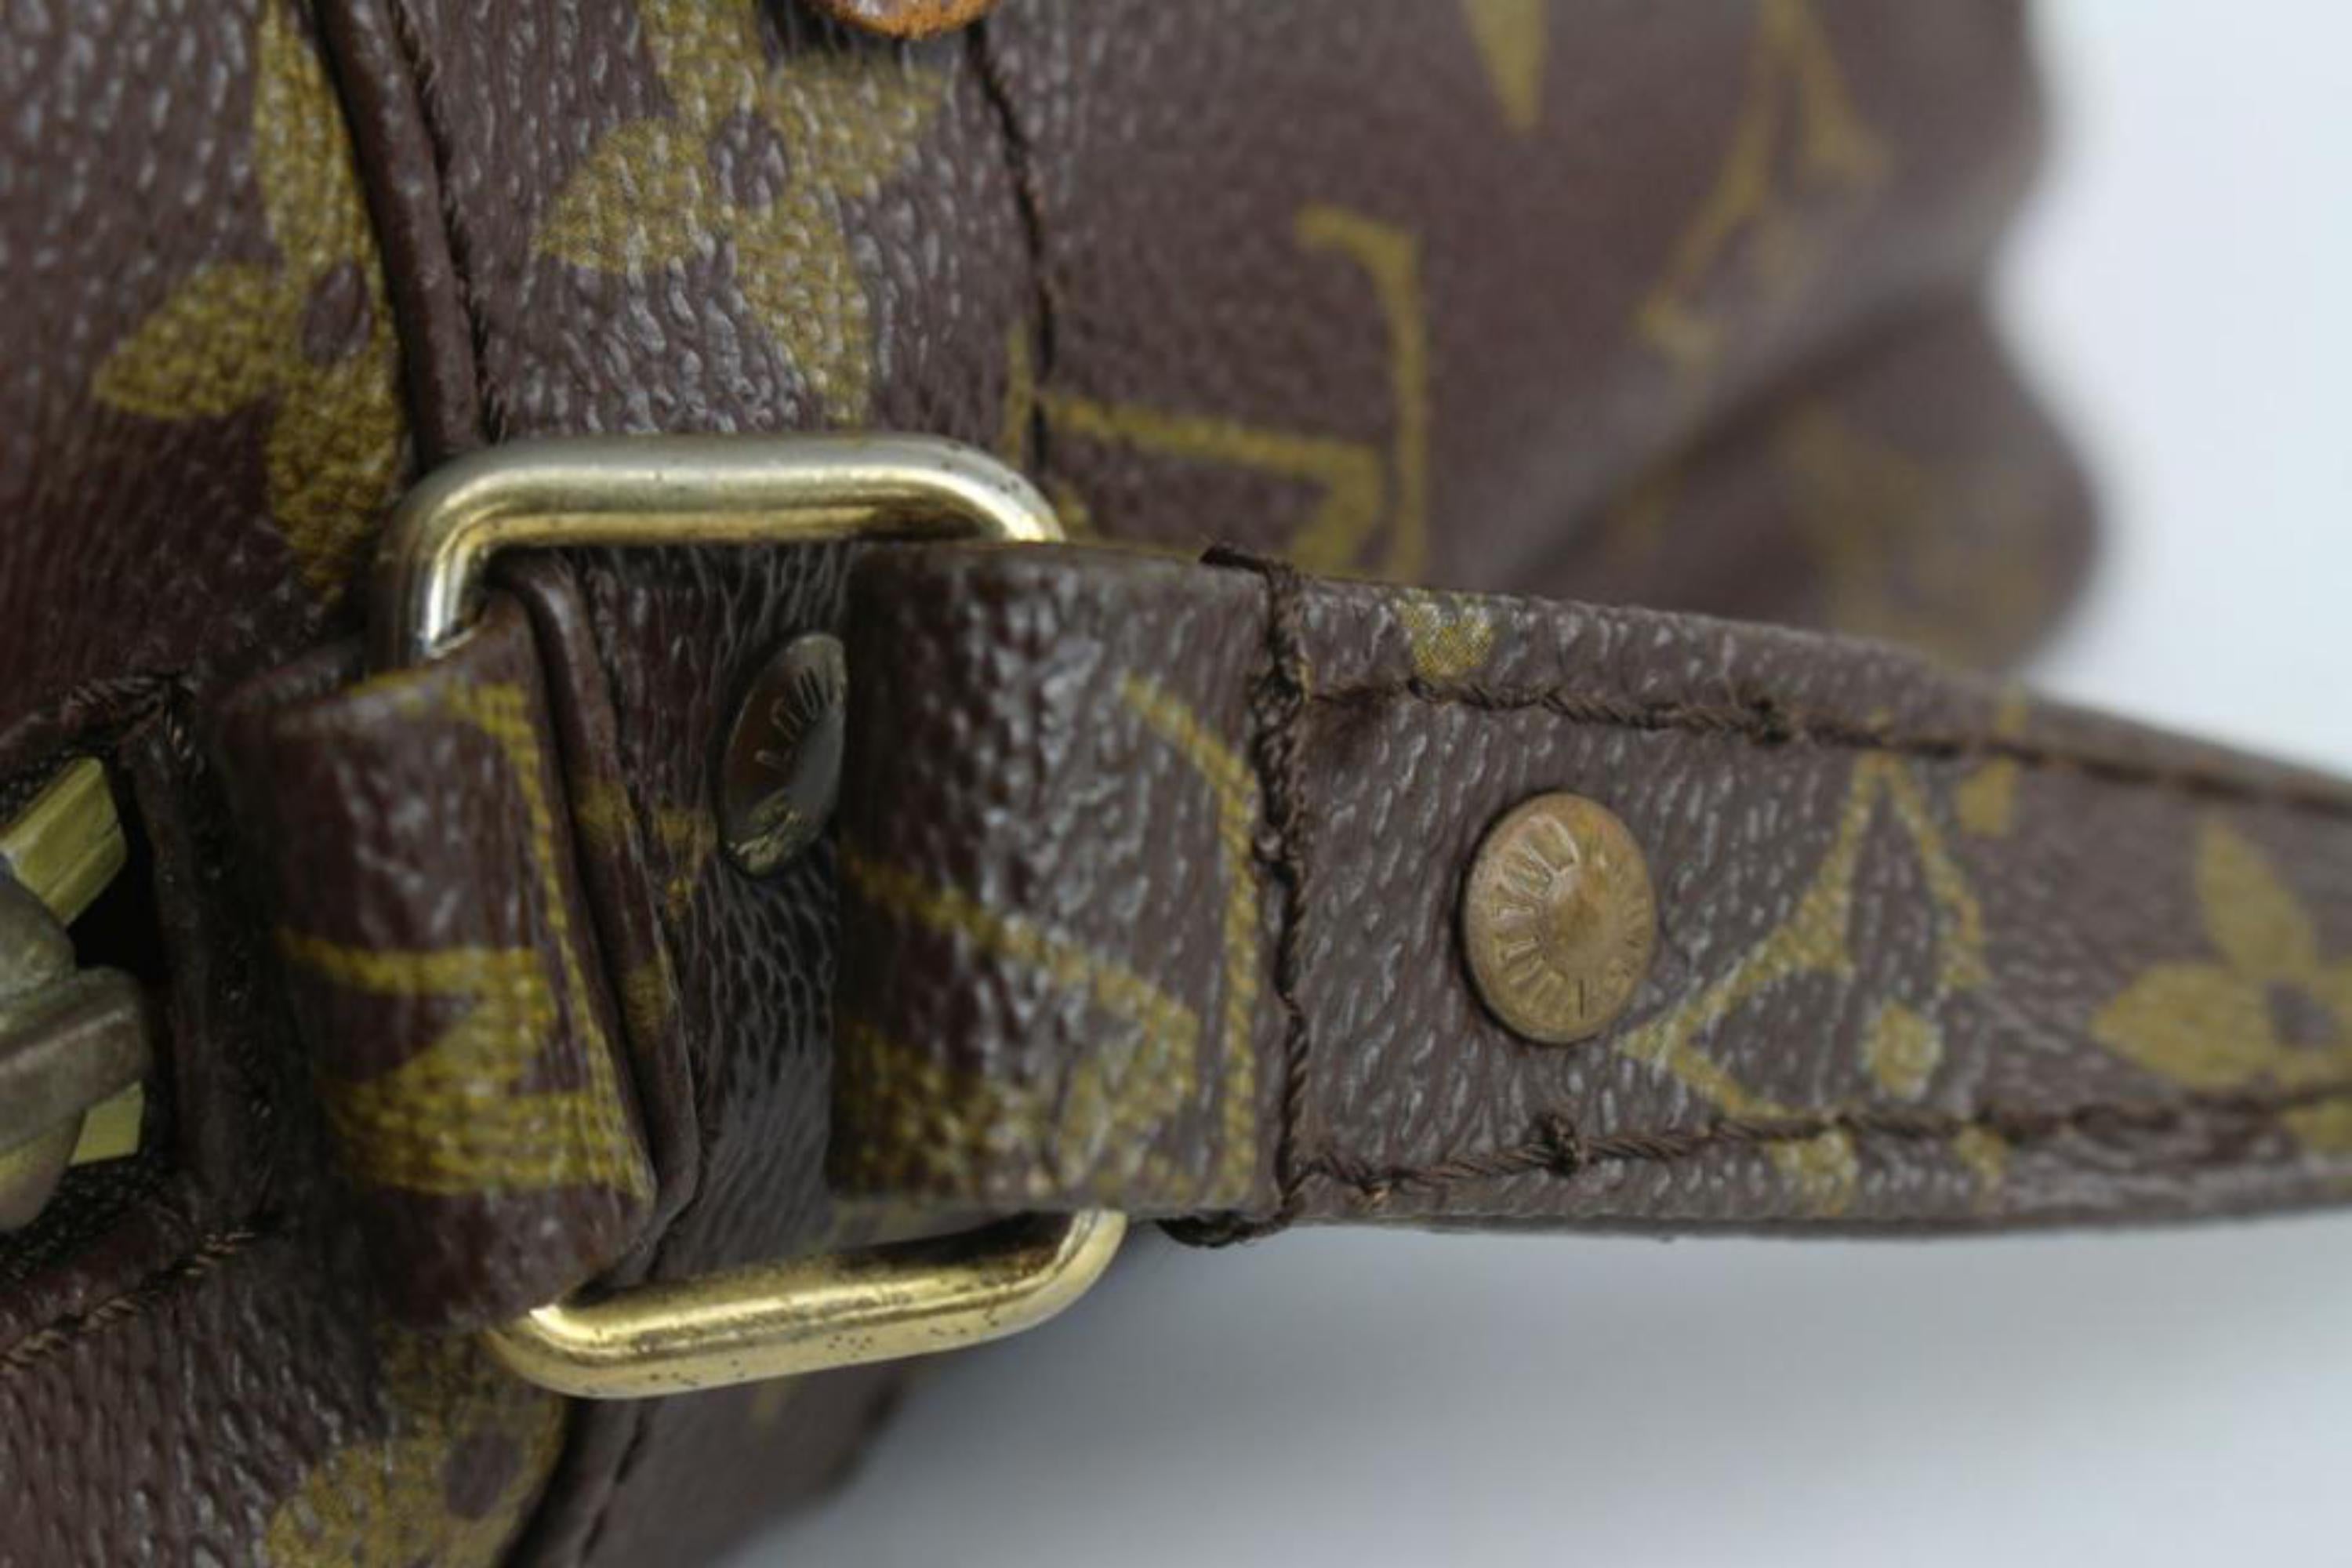 What Goes Around Comes Around Louis Vuitton Monogram Nile Bag